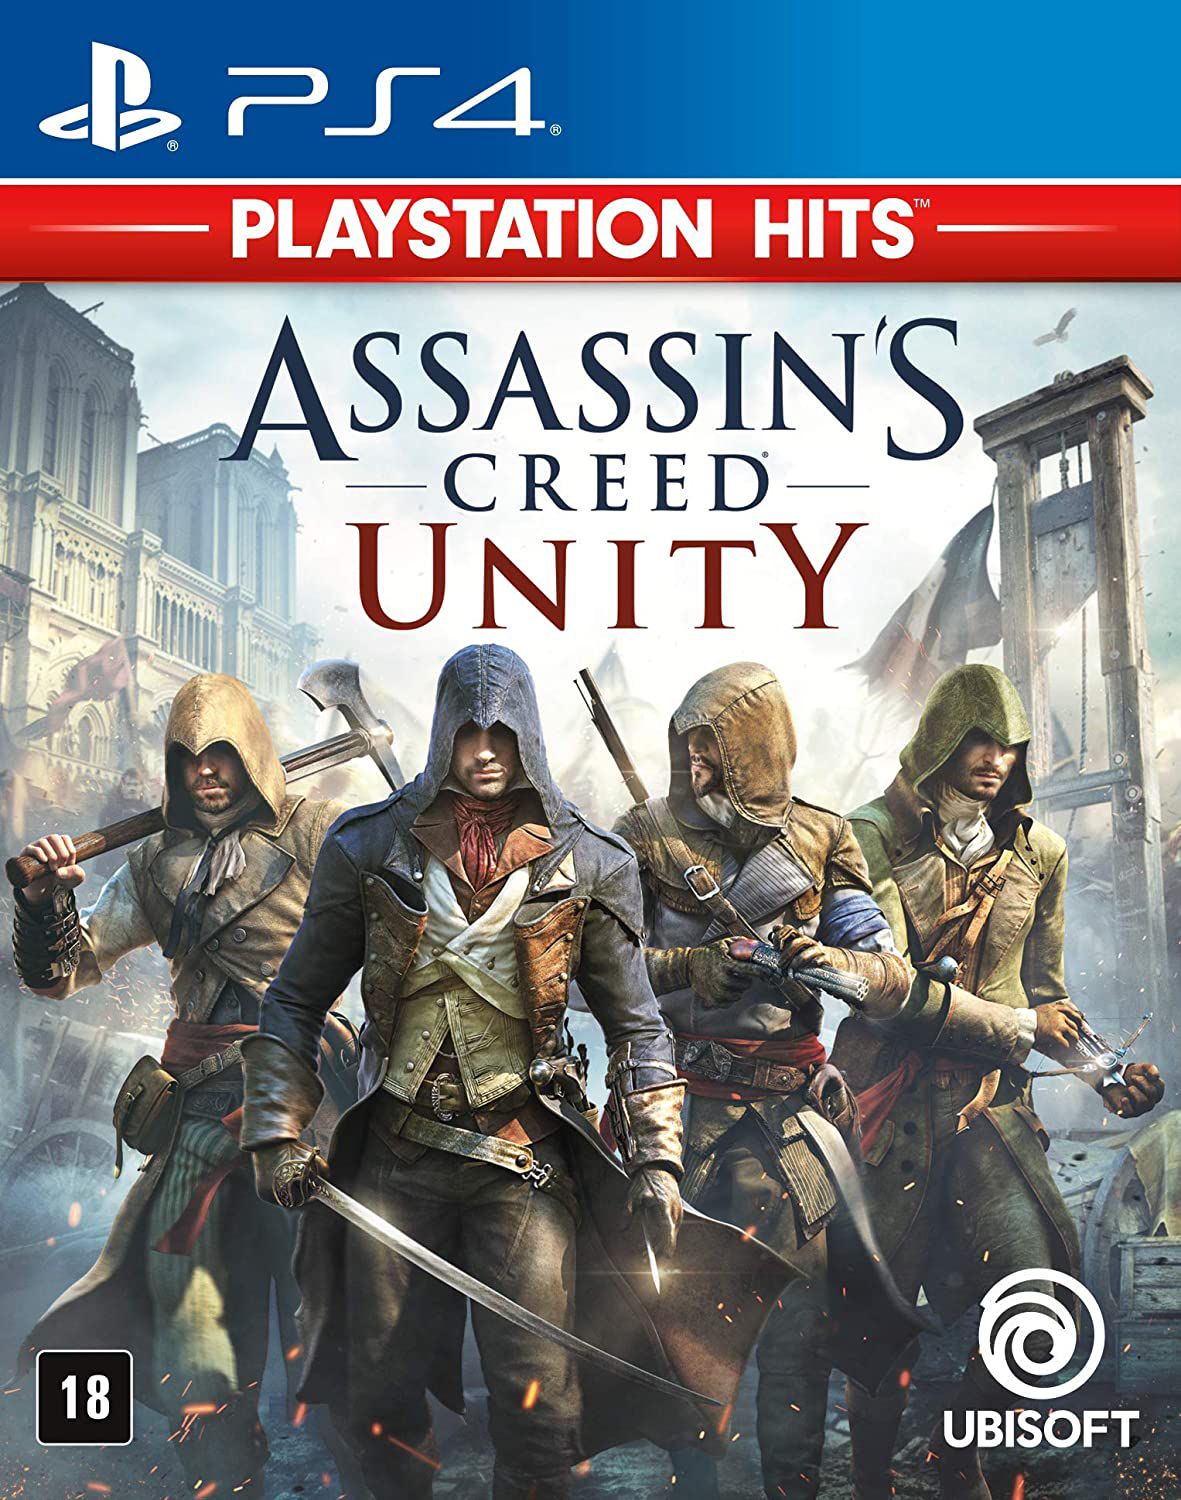 Jogo PS4 Assassin's Creed Unity Game Mídia Física - Go Games Geek Store